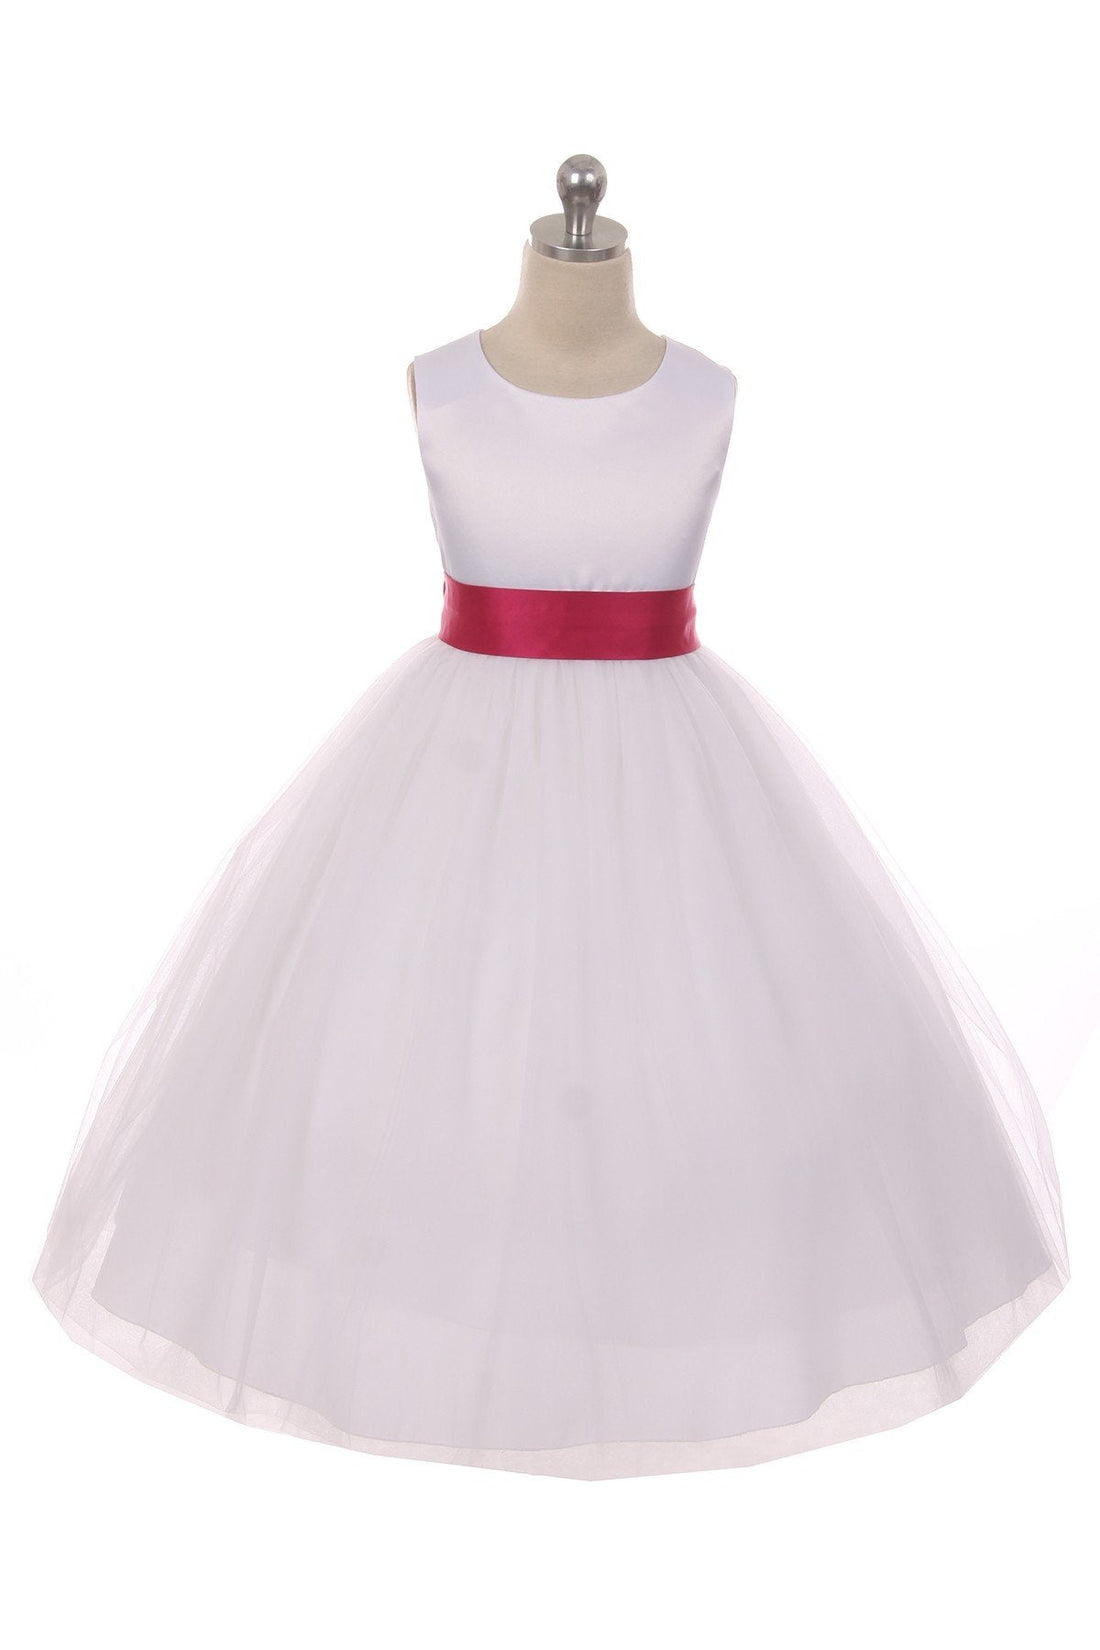 Fuchsia Girl Dress - Ivory Satin Sash Bow Girl Dress - AS411 Kids Dream